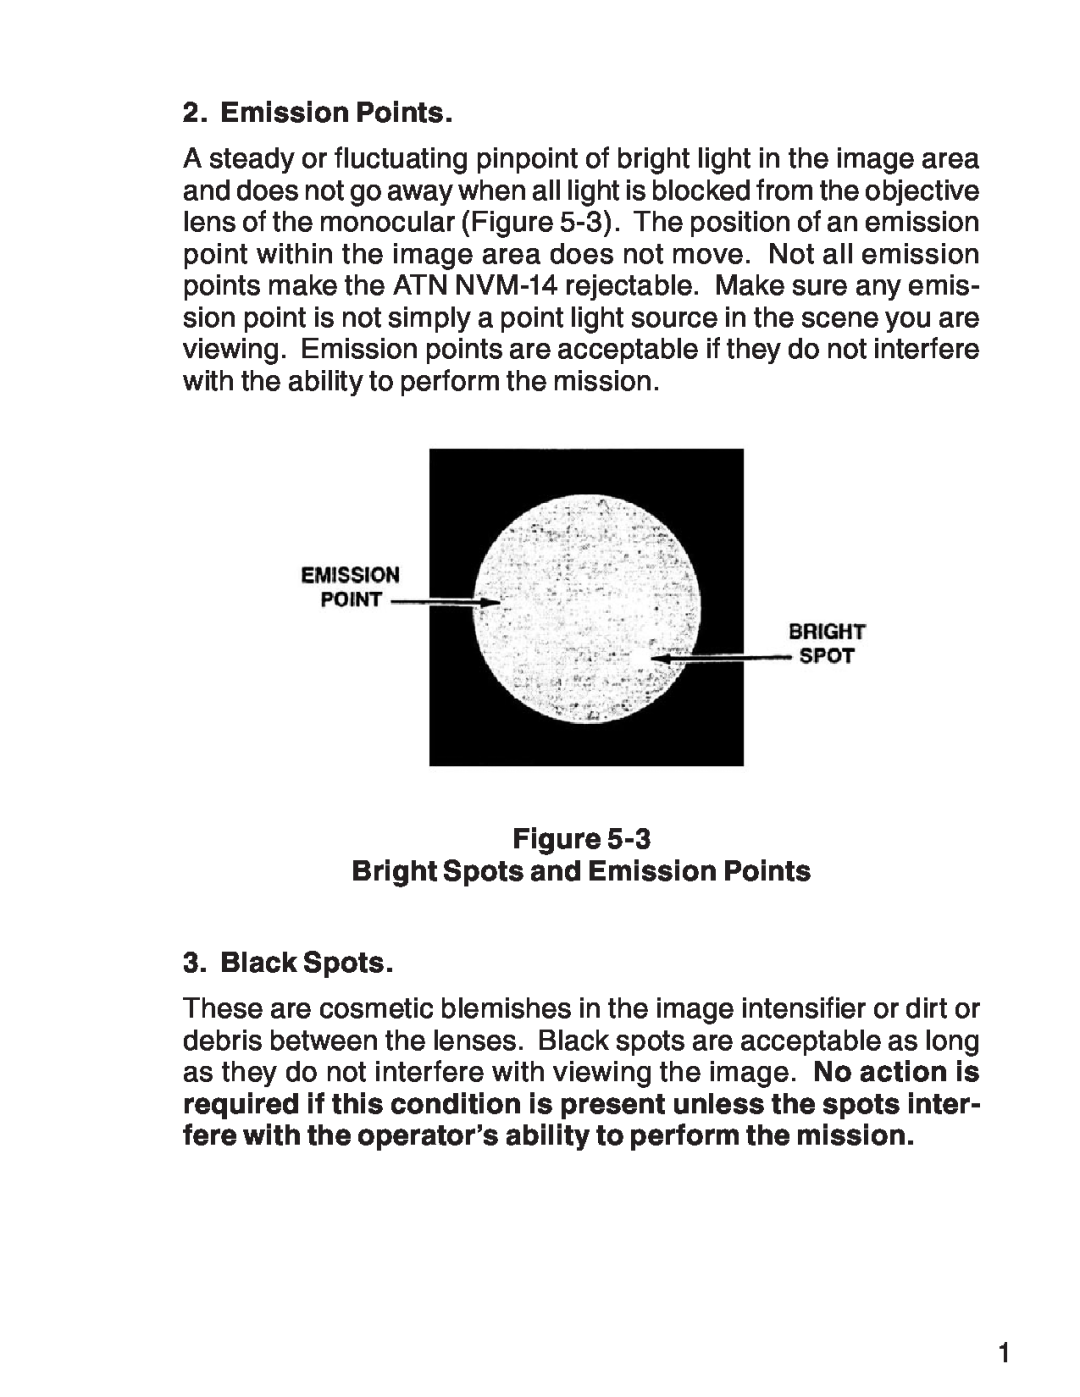 ATN manual Bright Spots and Emission Points 3. Black Spots 